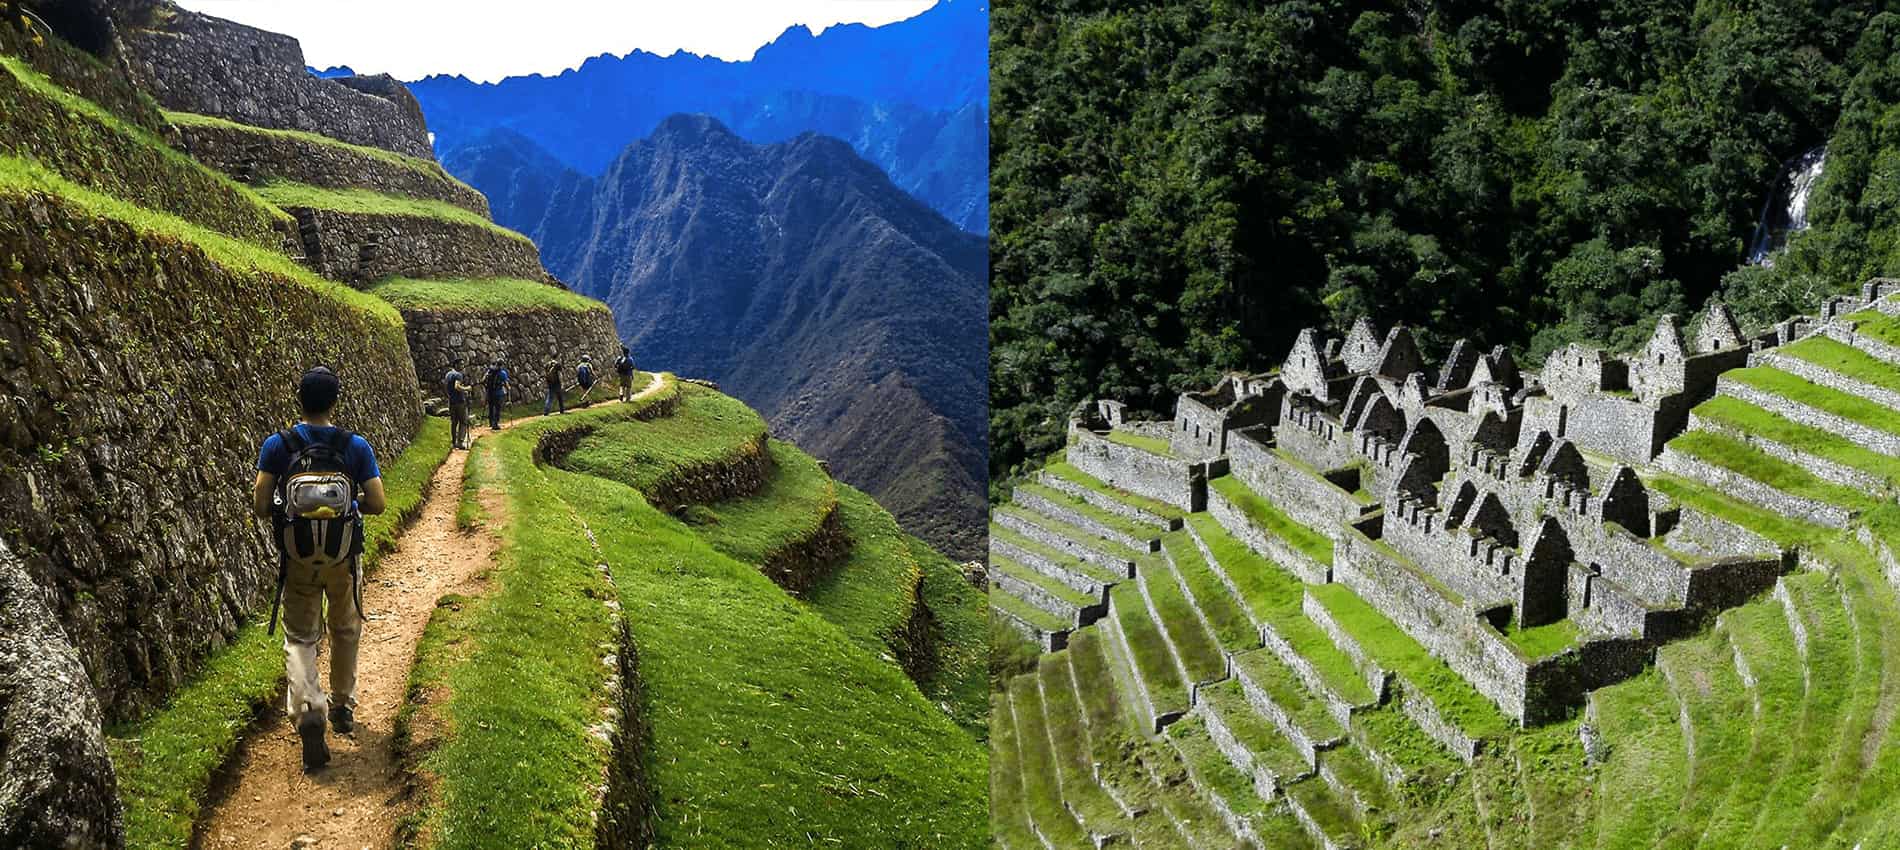 Inca Trail Tours, Inca Trail Trips & Hiking Tours